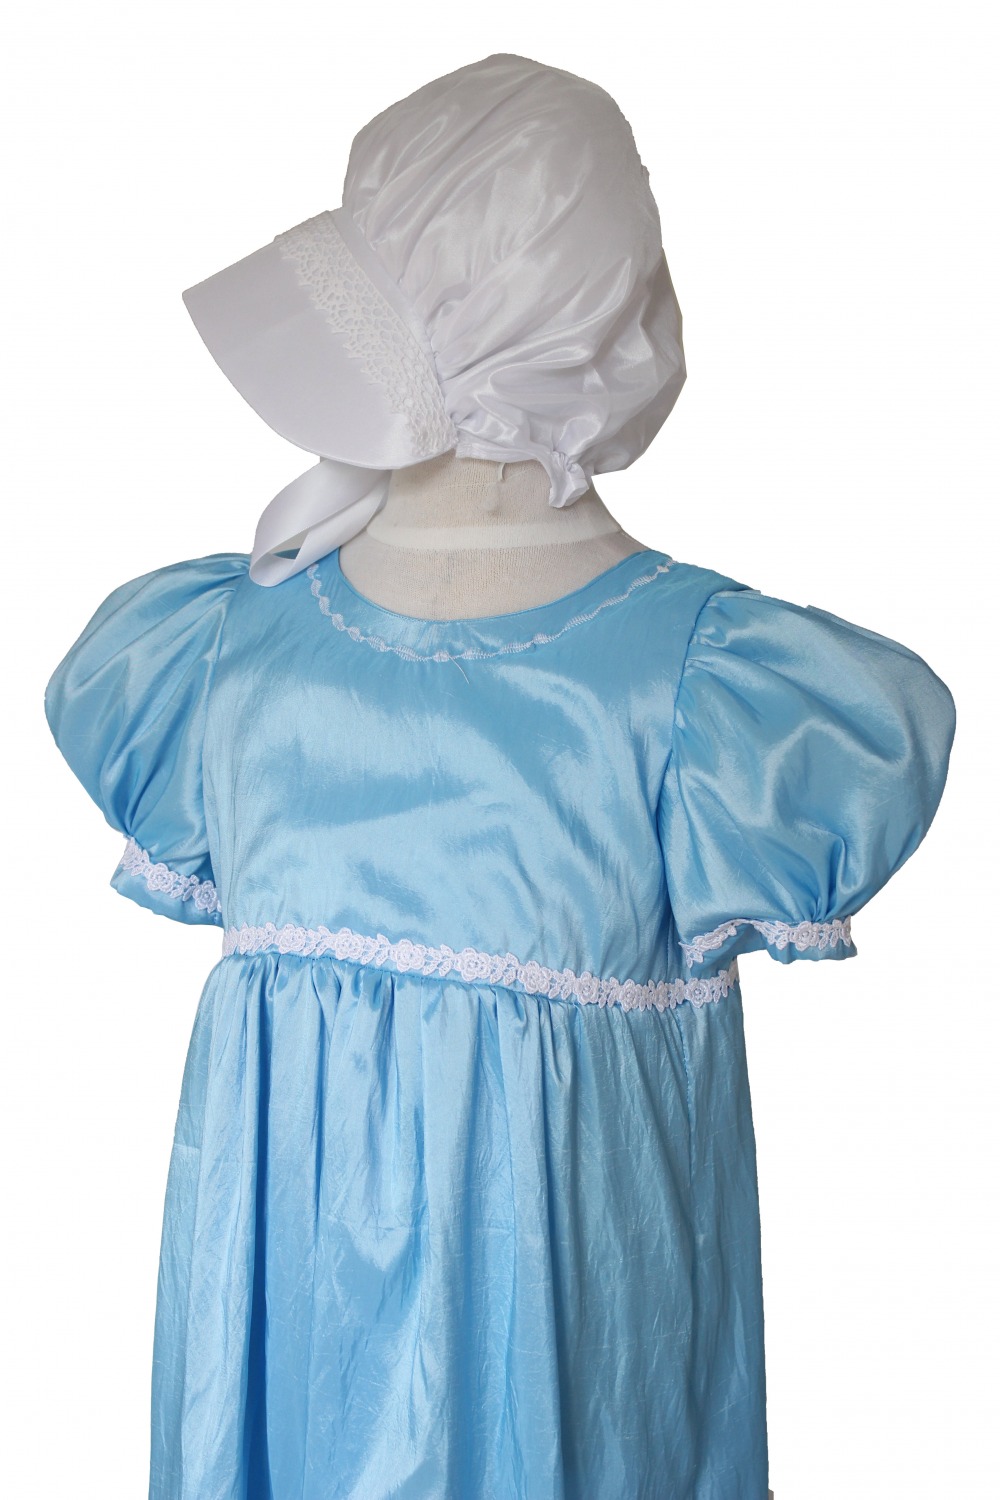 Girl's Regency Jane Austen Costume Age 10 - 11 Years  Image